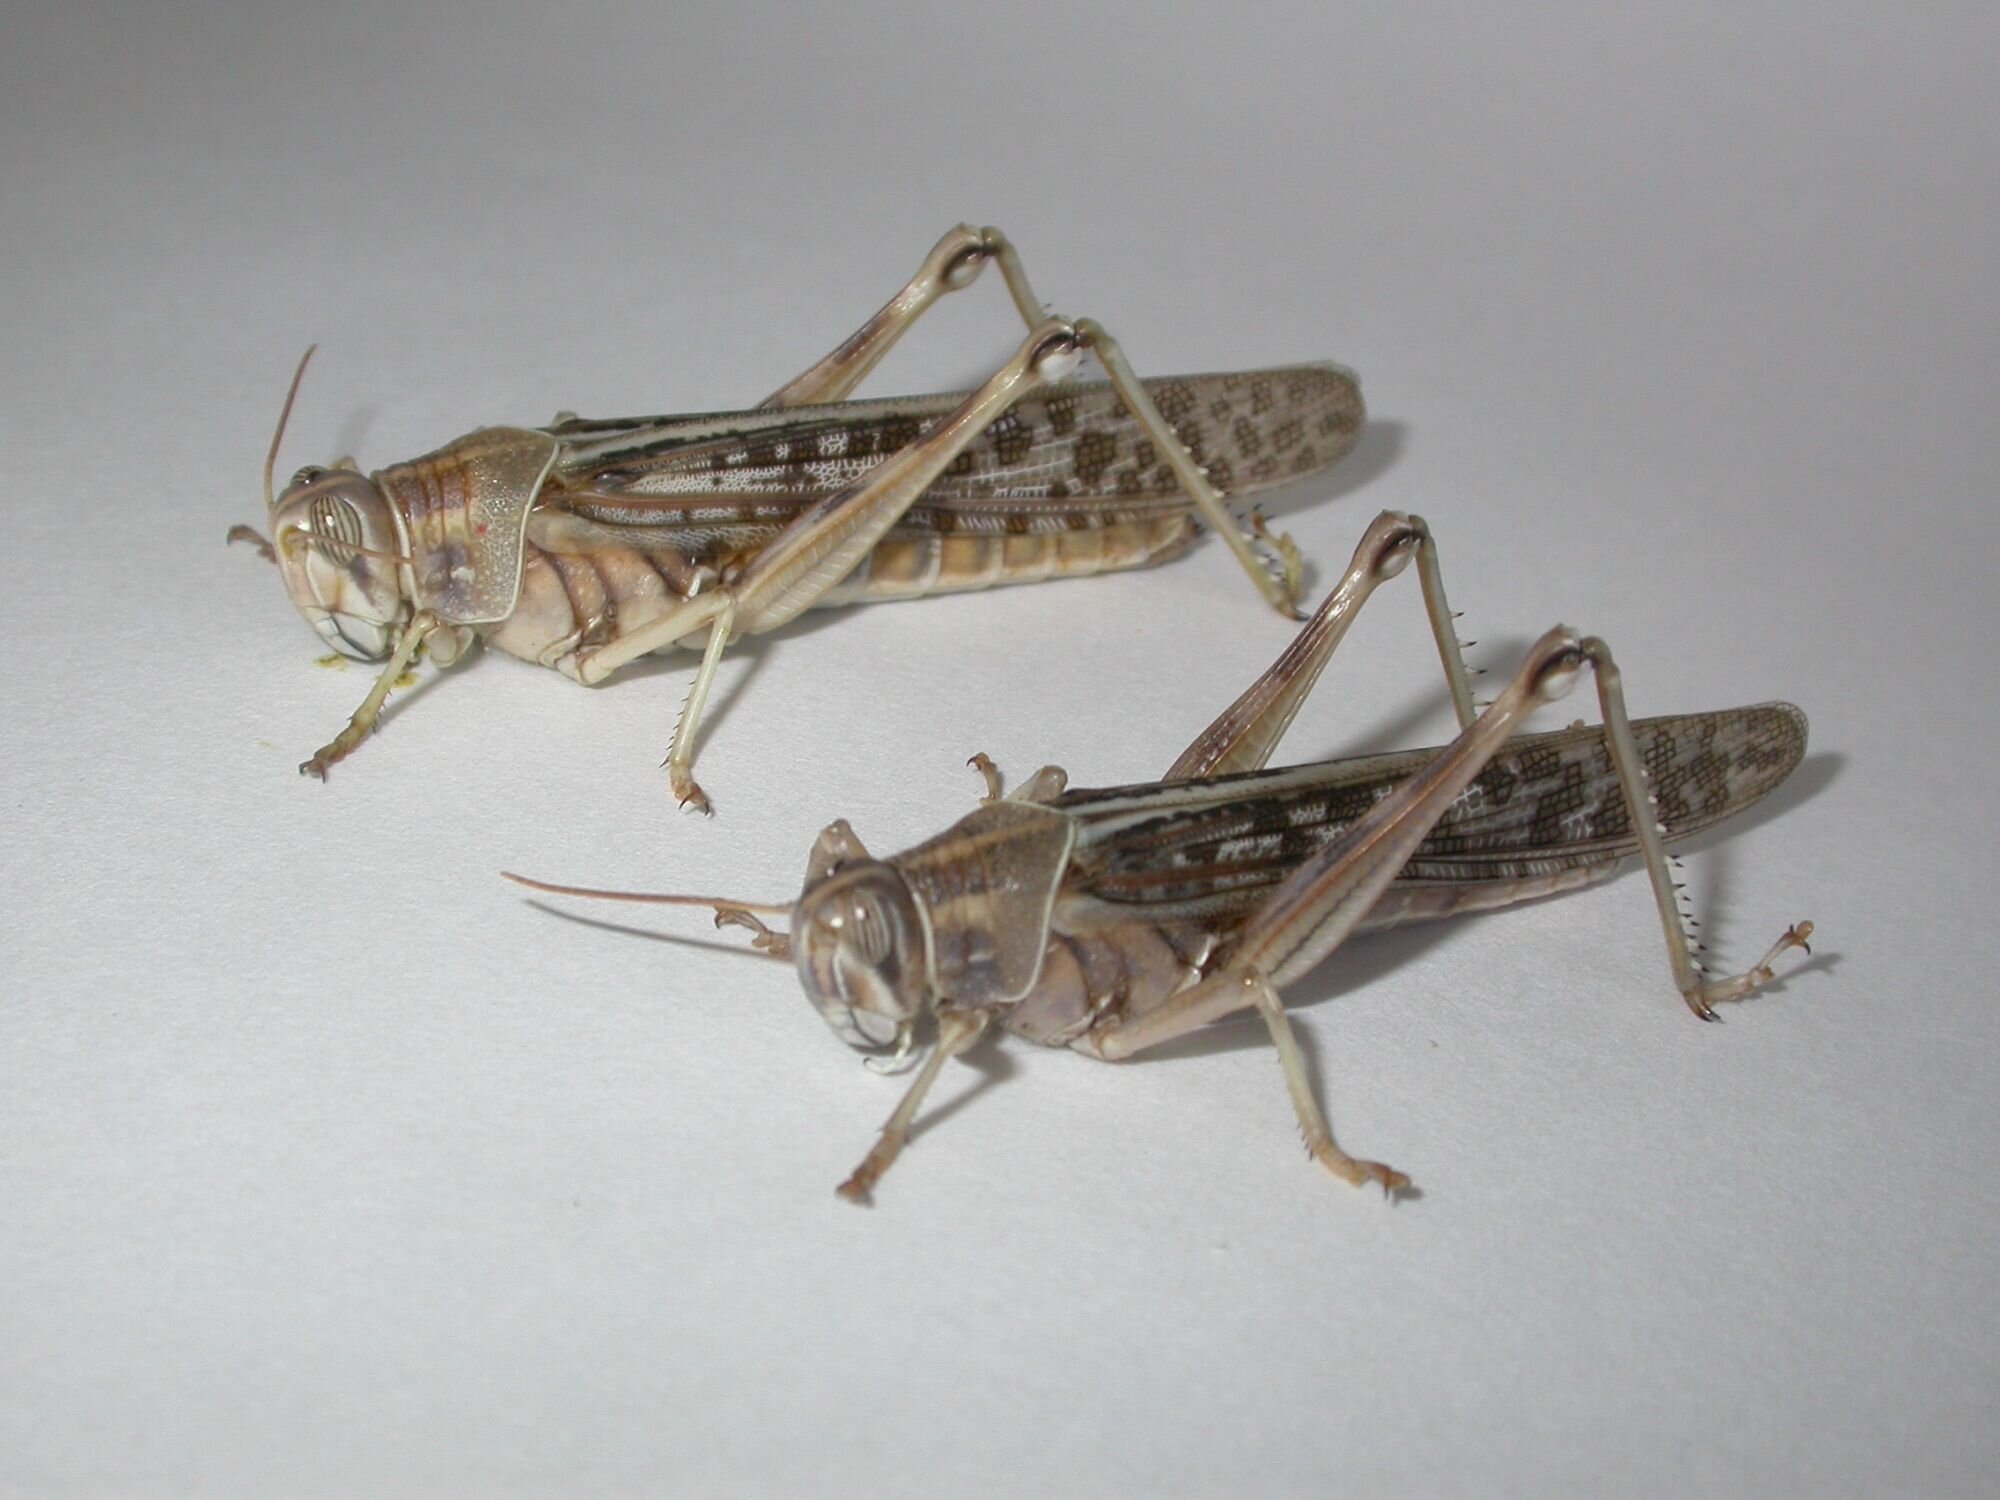 grasshopper swarm